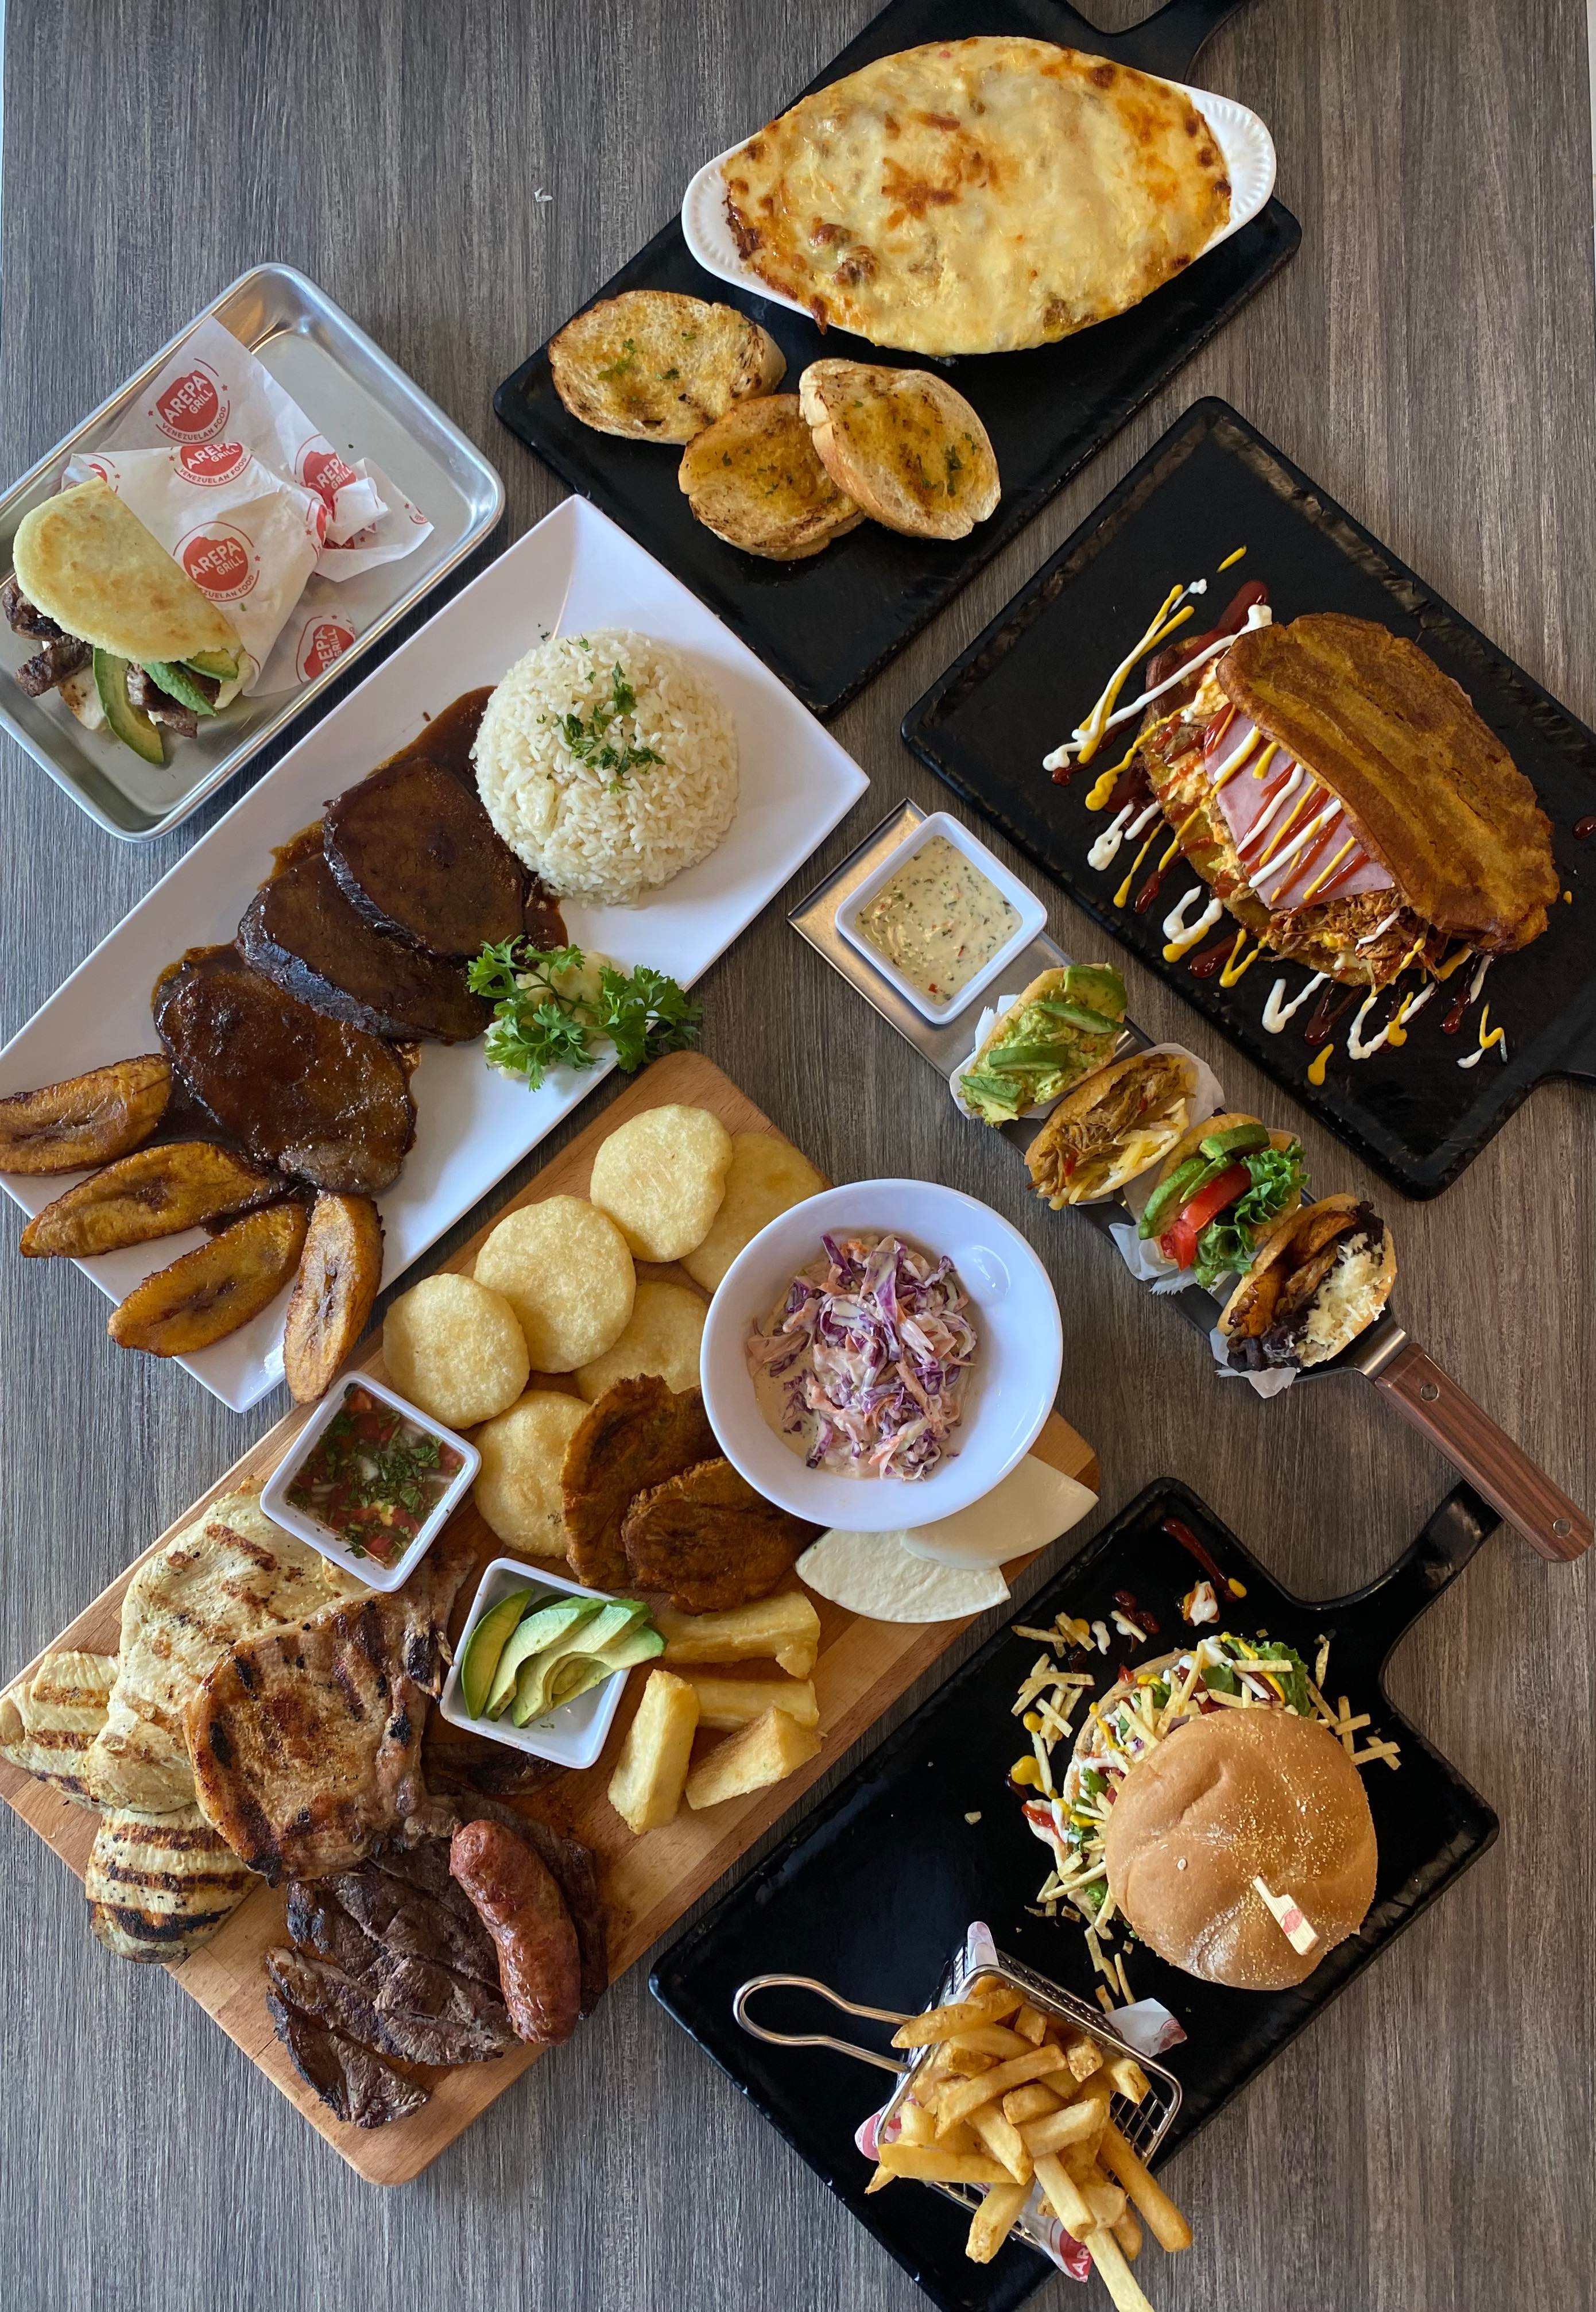 Arepa Grill features Venezuelan cuisine in Doraville, Georgia